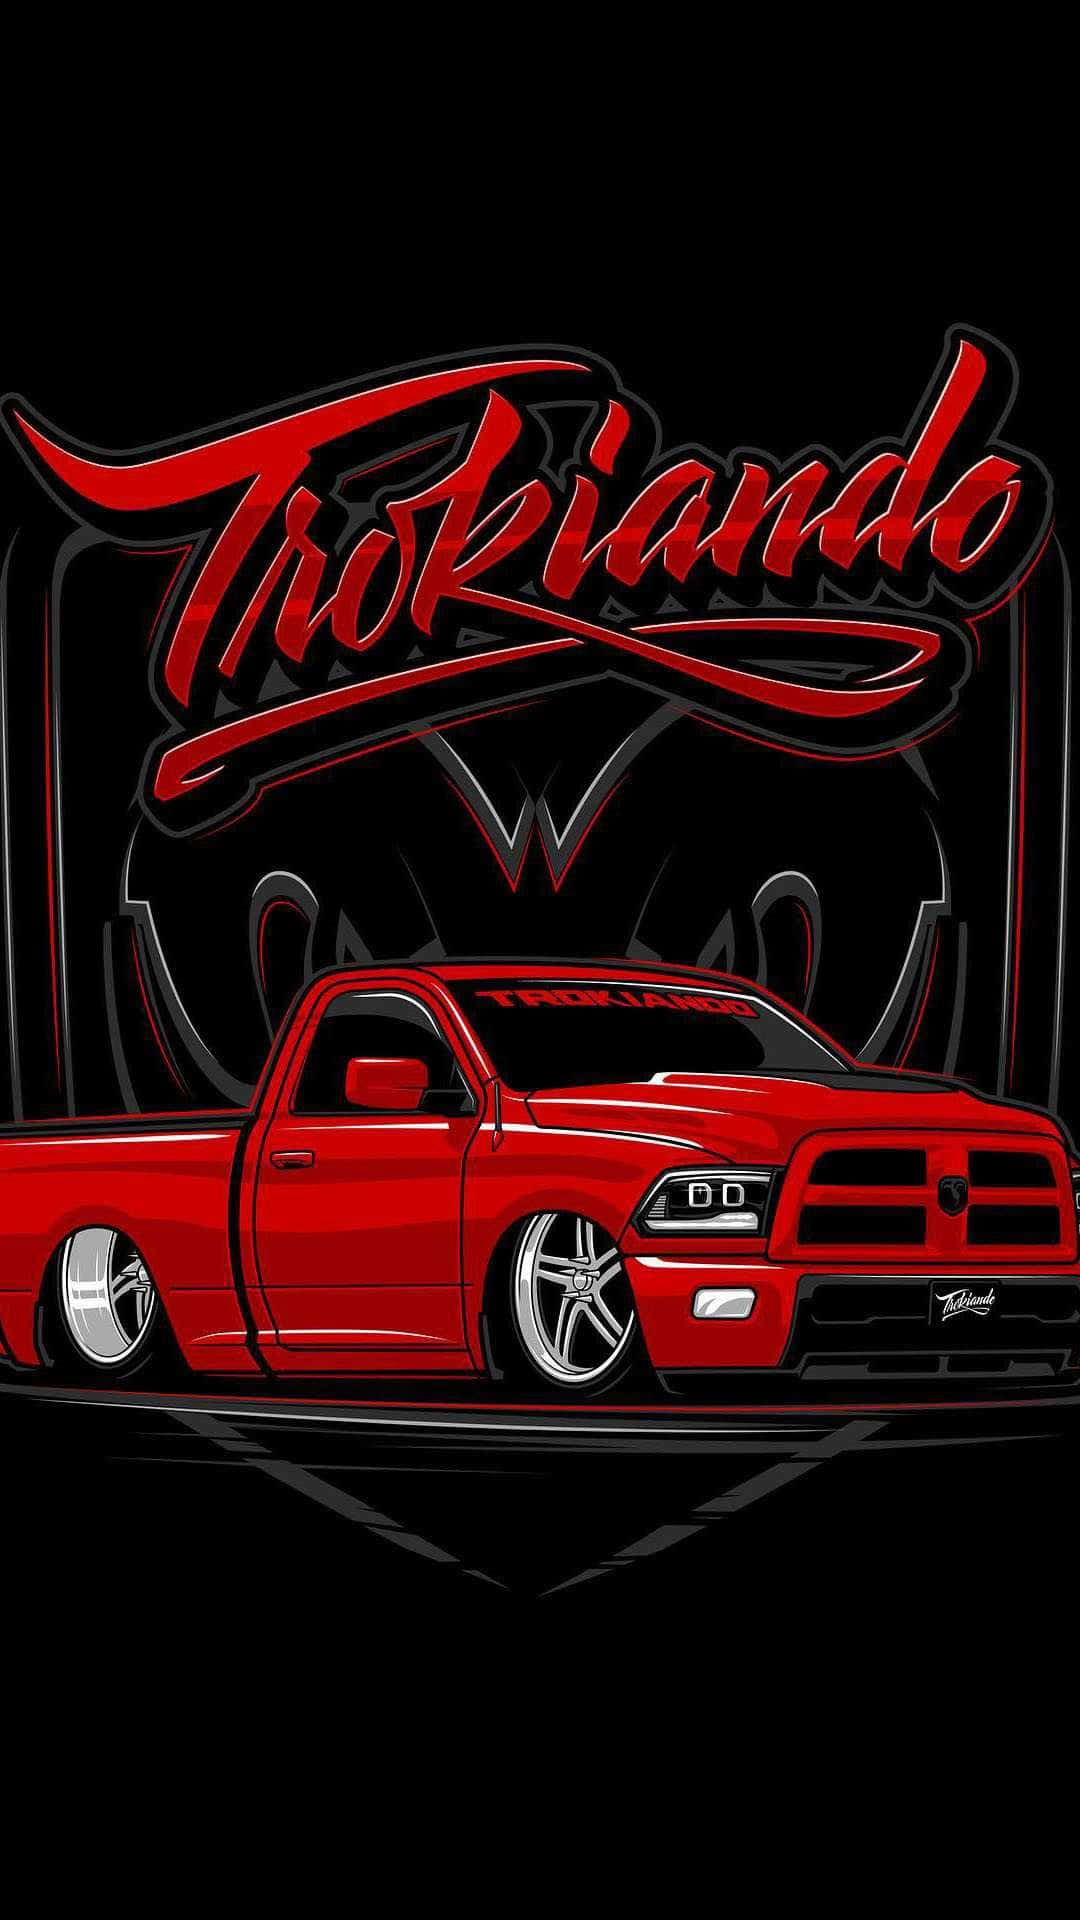 Red Takuache Truck Trokiando Artwork Wallpaper